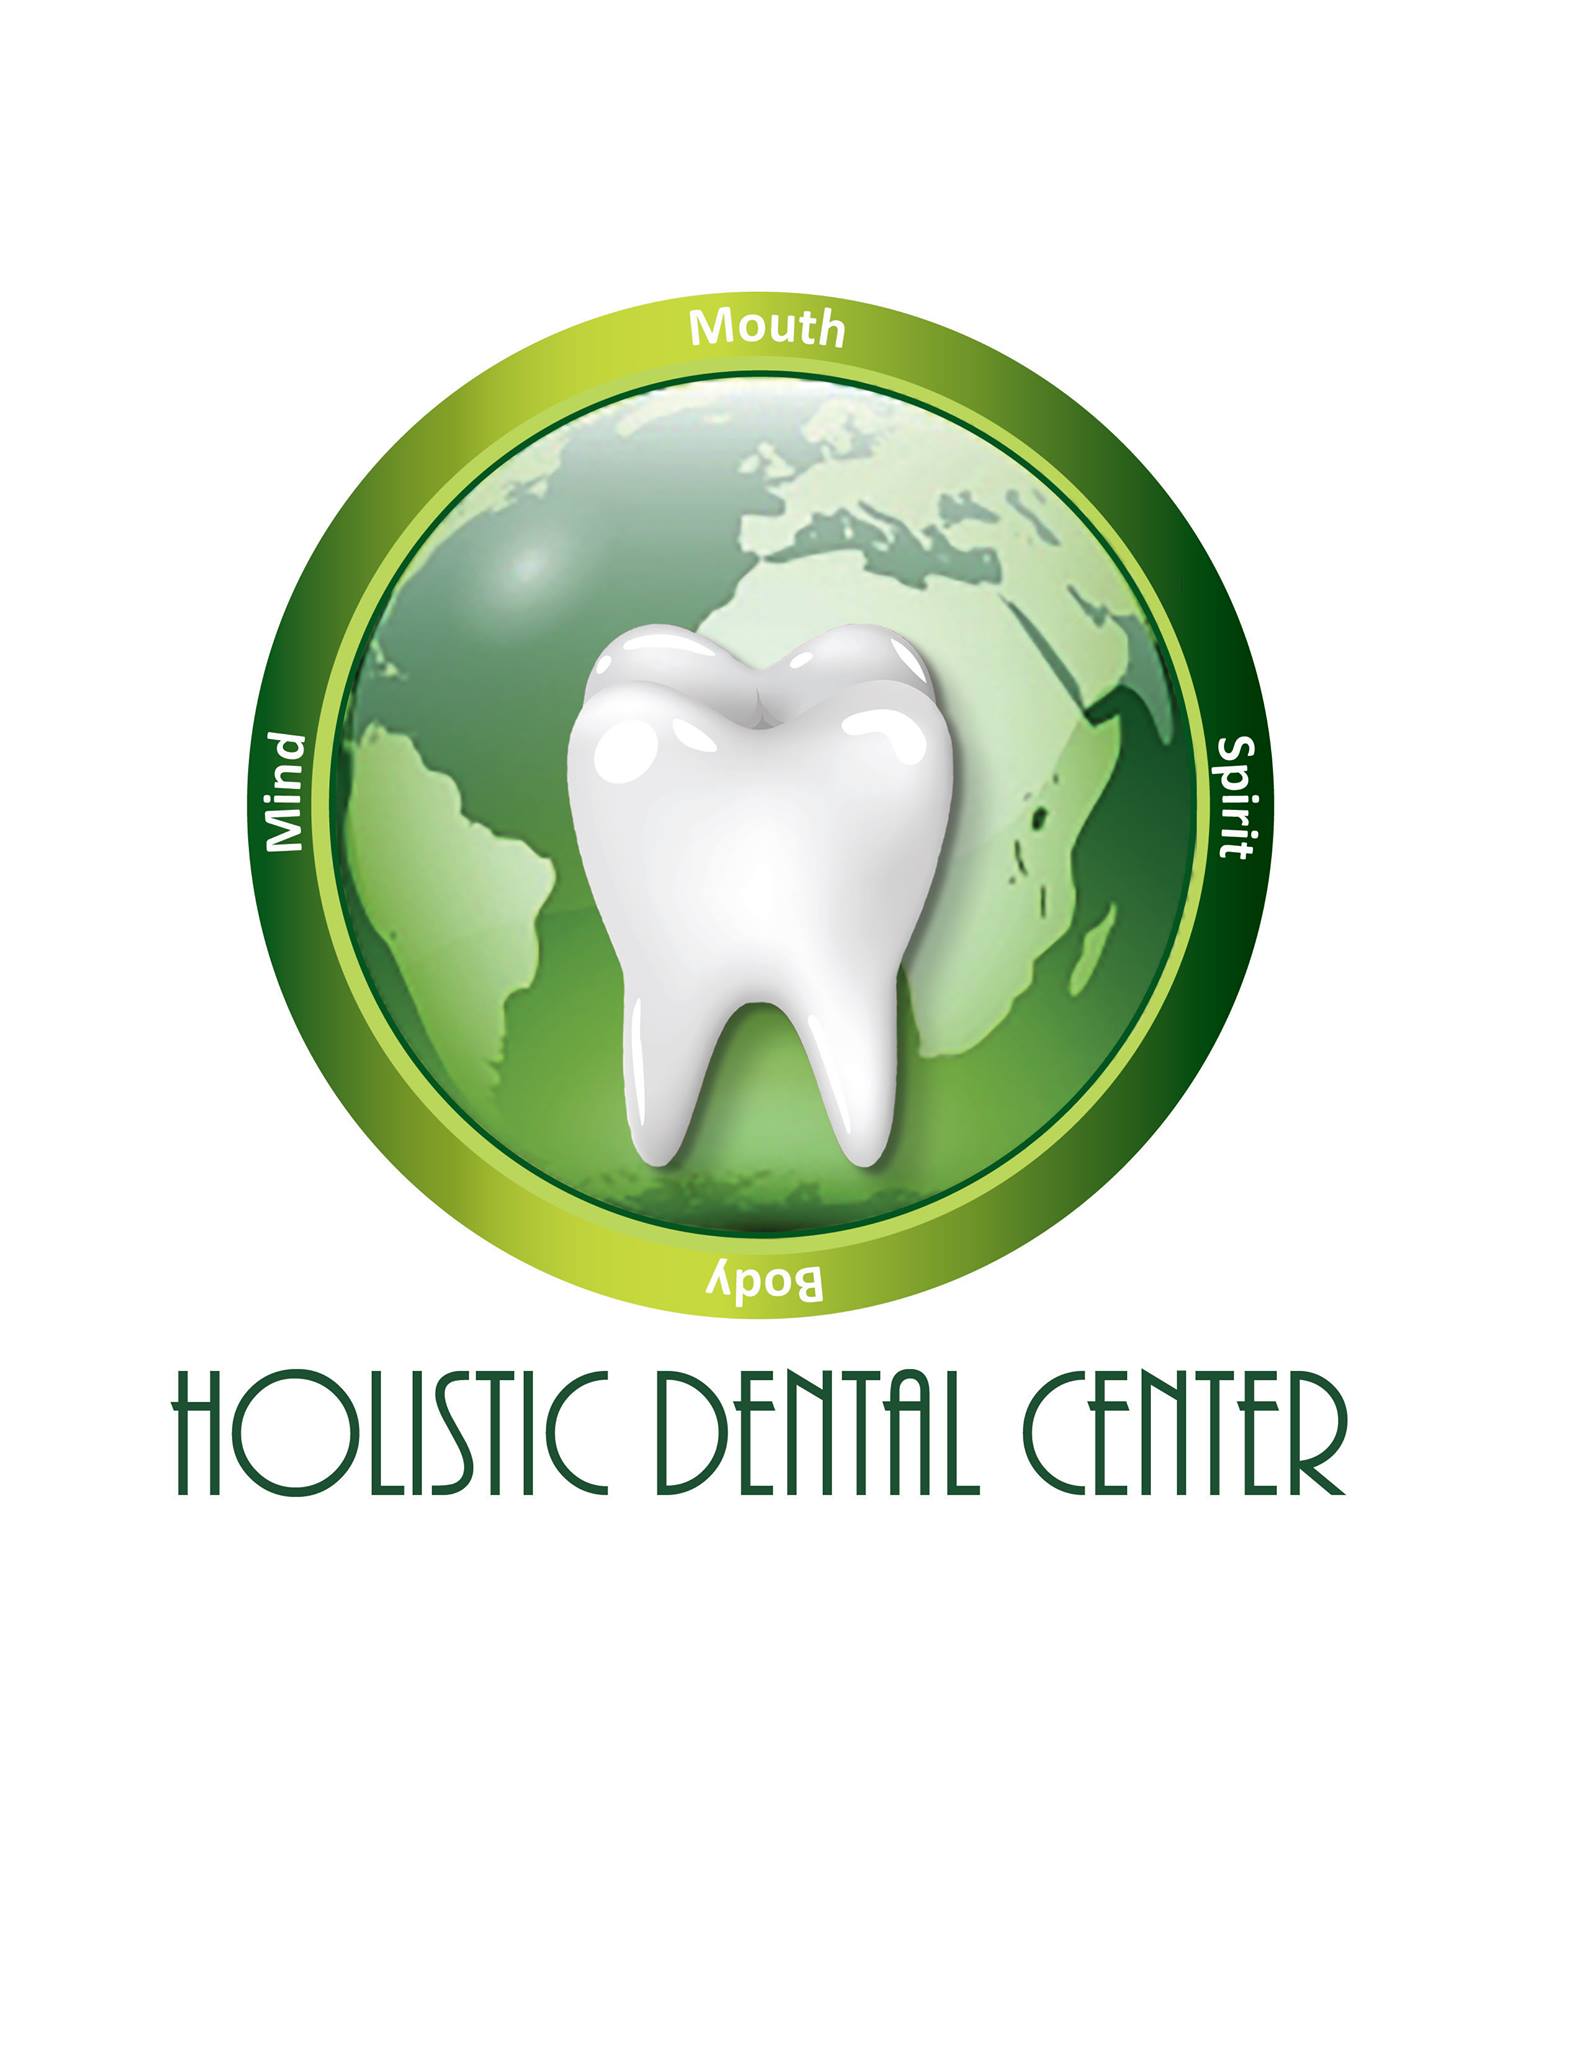 The Holistic Dental Center in Millburn, NJ, Introduces New Dental Implant Procedures